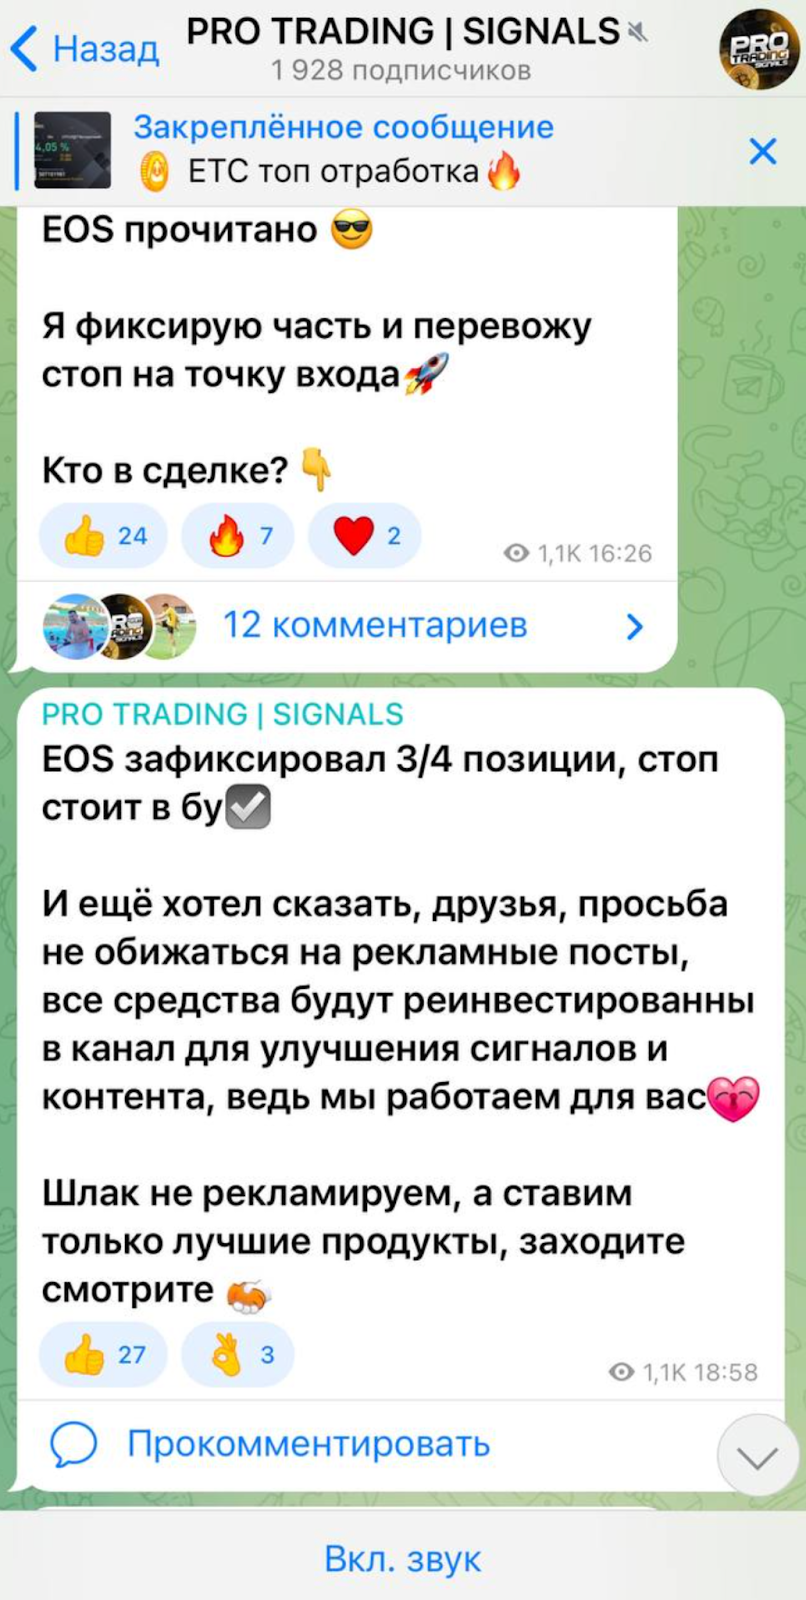 проект pro trading signals